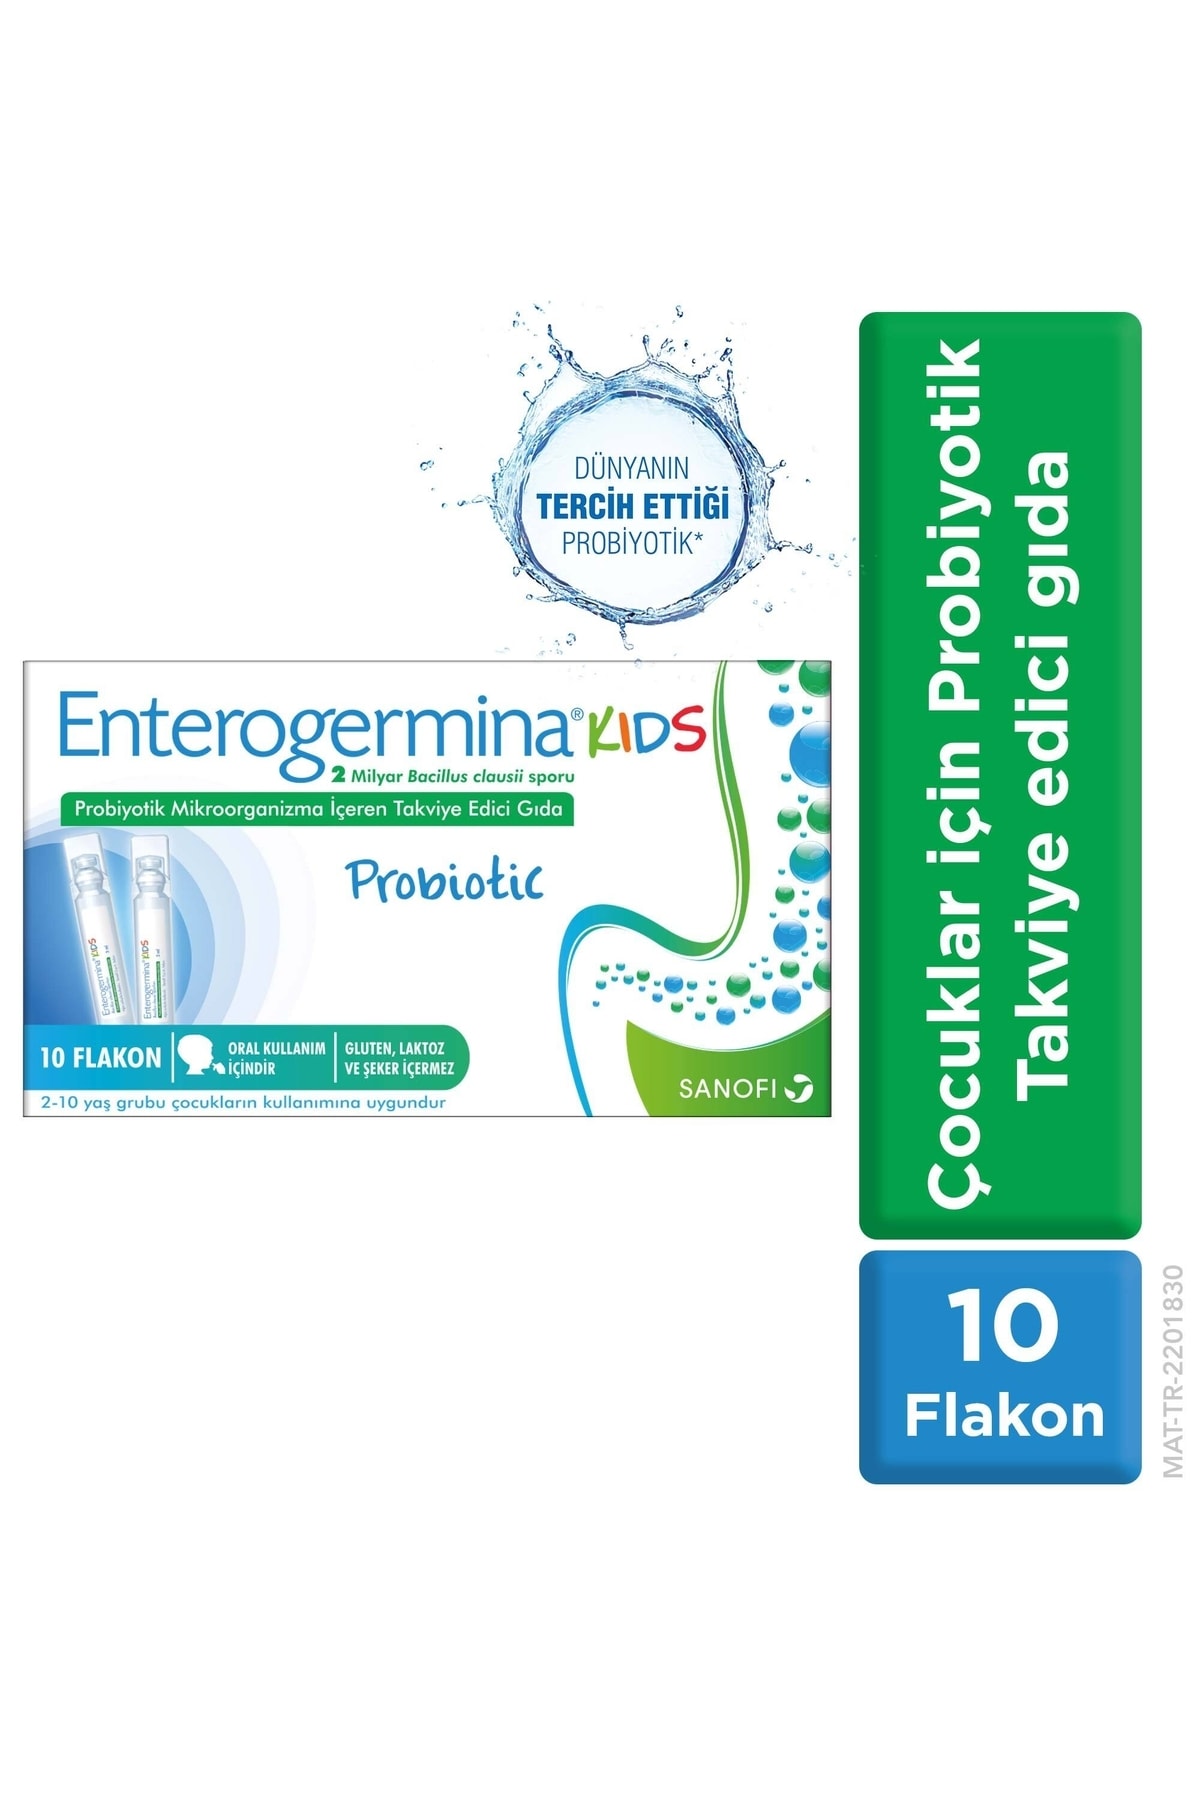 Enterogermina Kids 10 Flakon 2 Milyar Bacillus Clausii Sporu İçeren Probiyotik